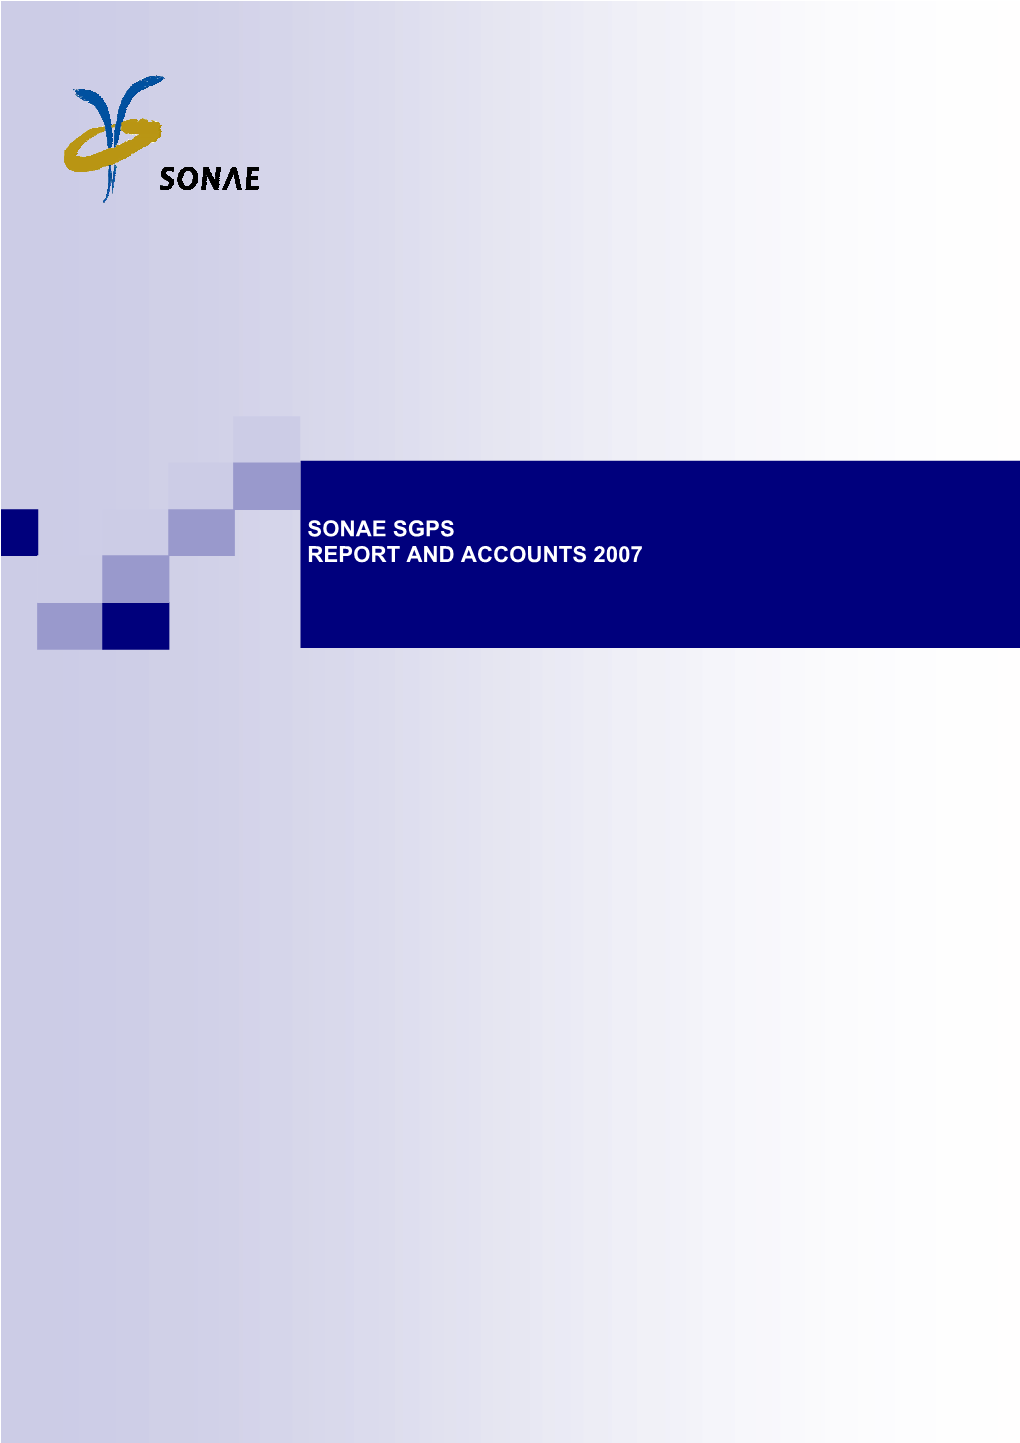 Sonae Sgps Report and Accounts 2007